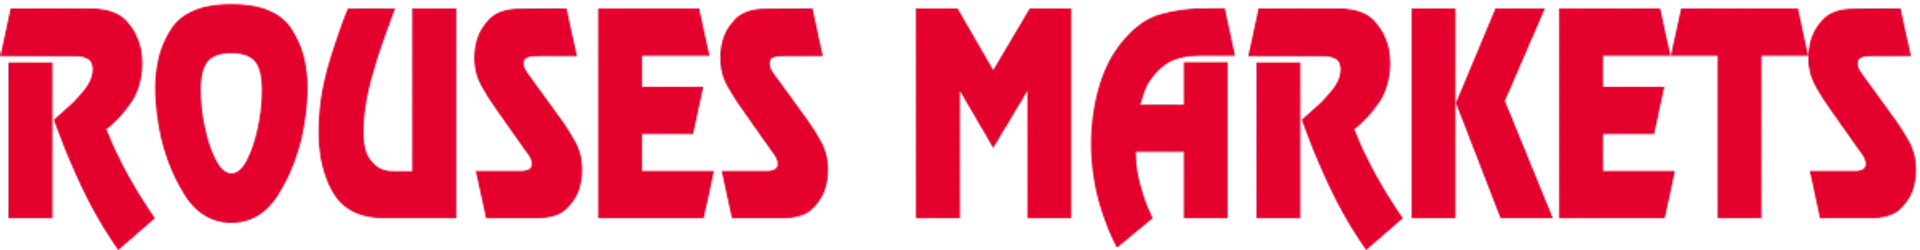 ROUSES MARKETS logo